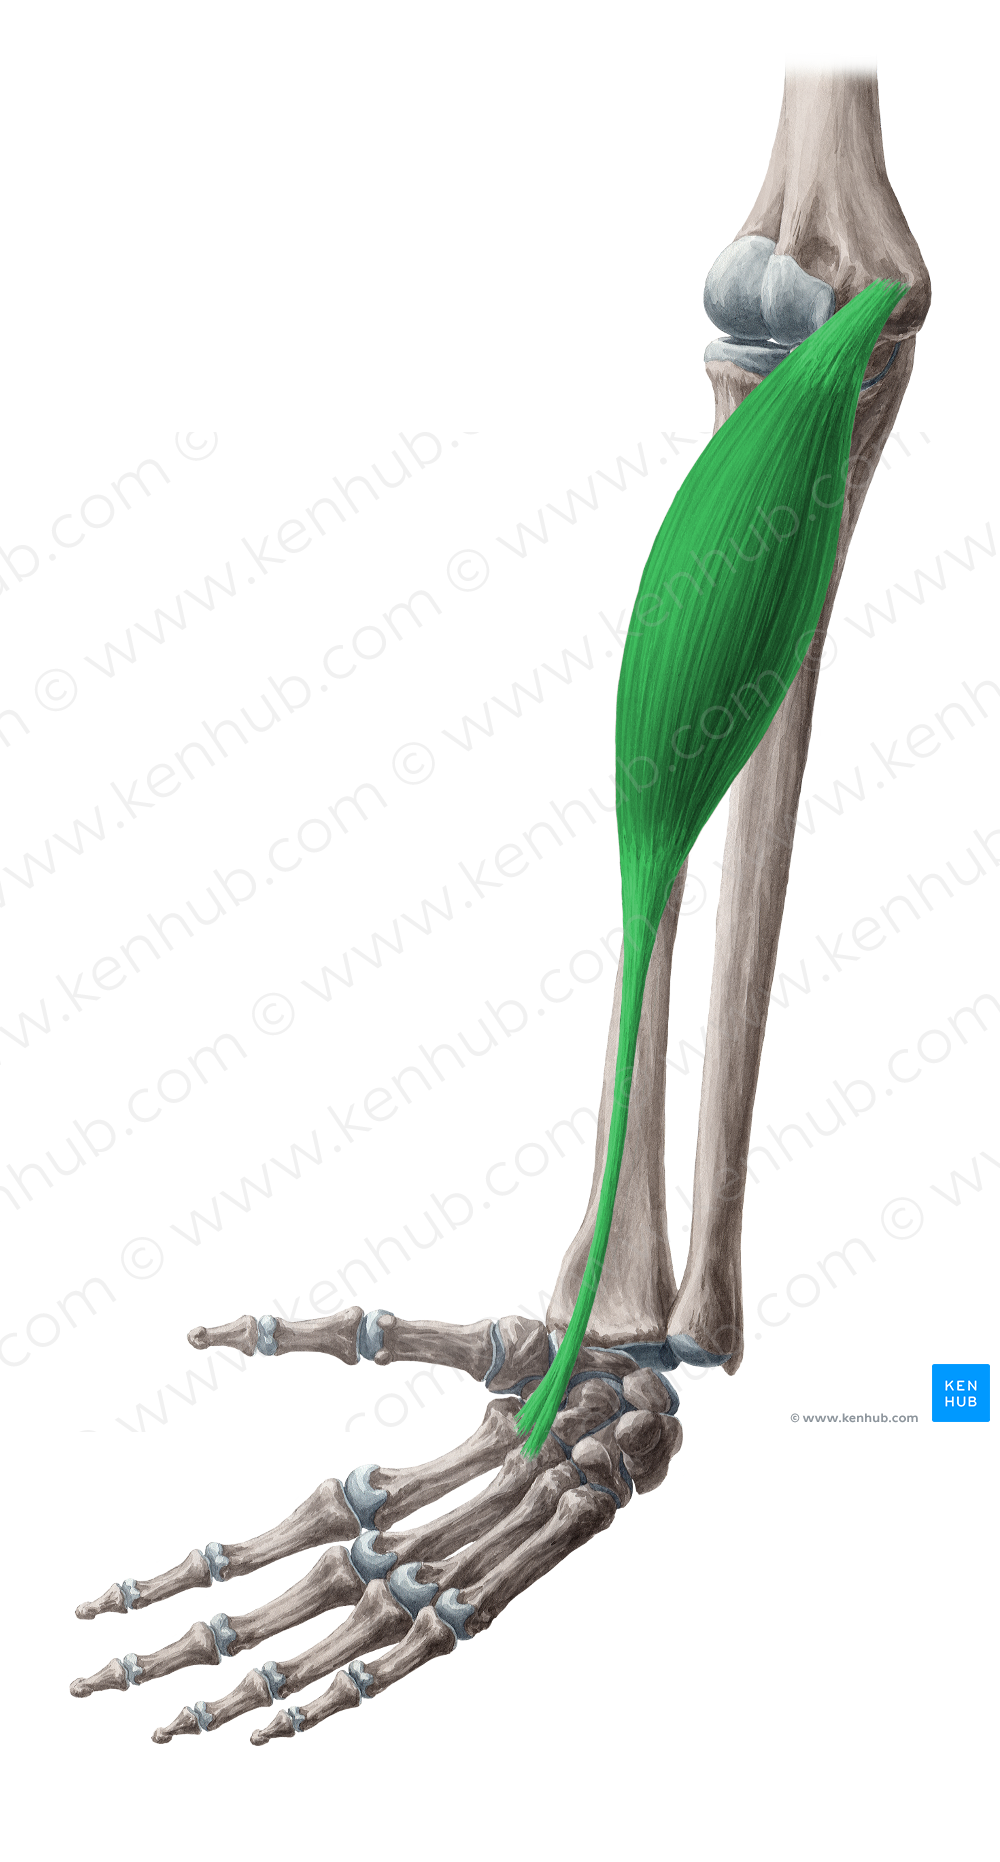 Flexor carpi radialis muscle (#5347)